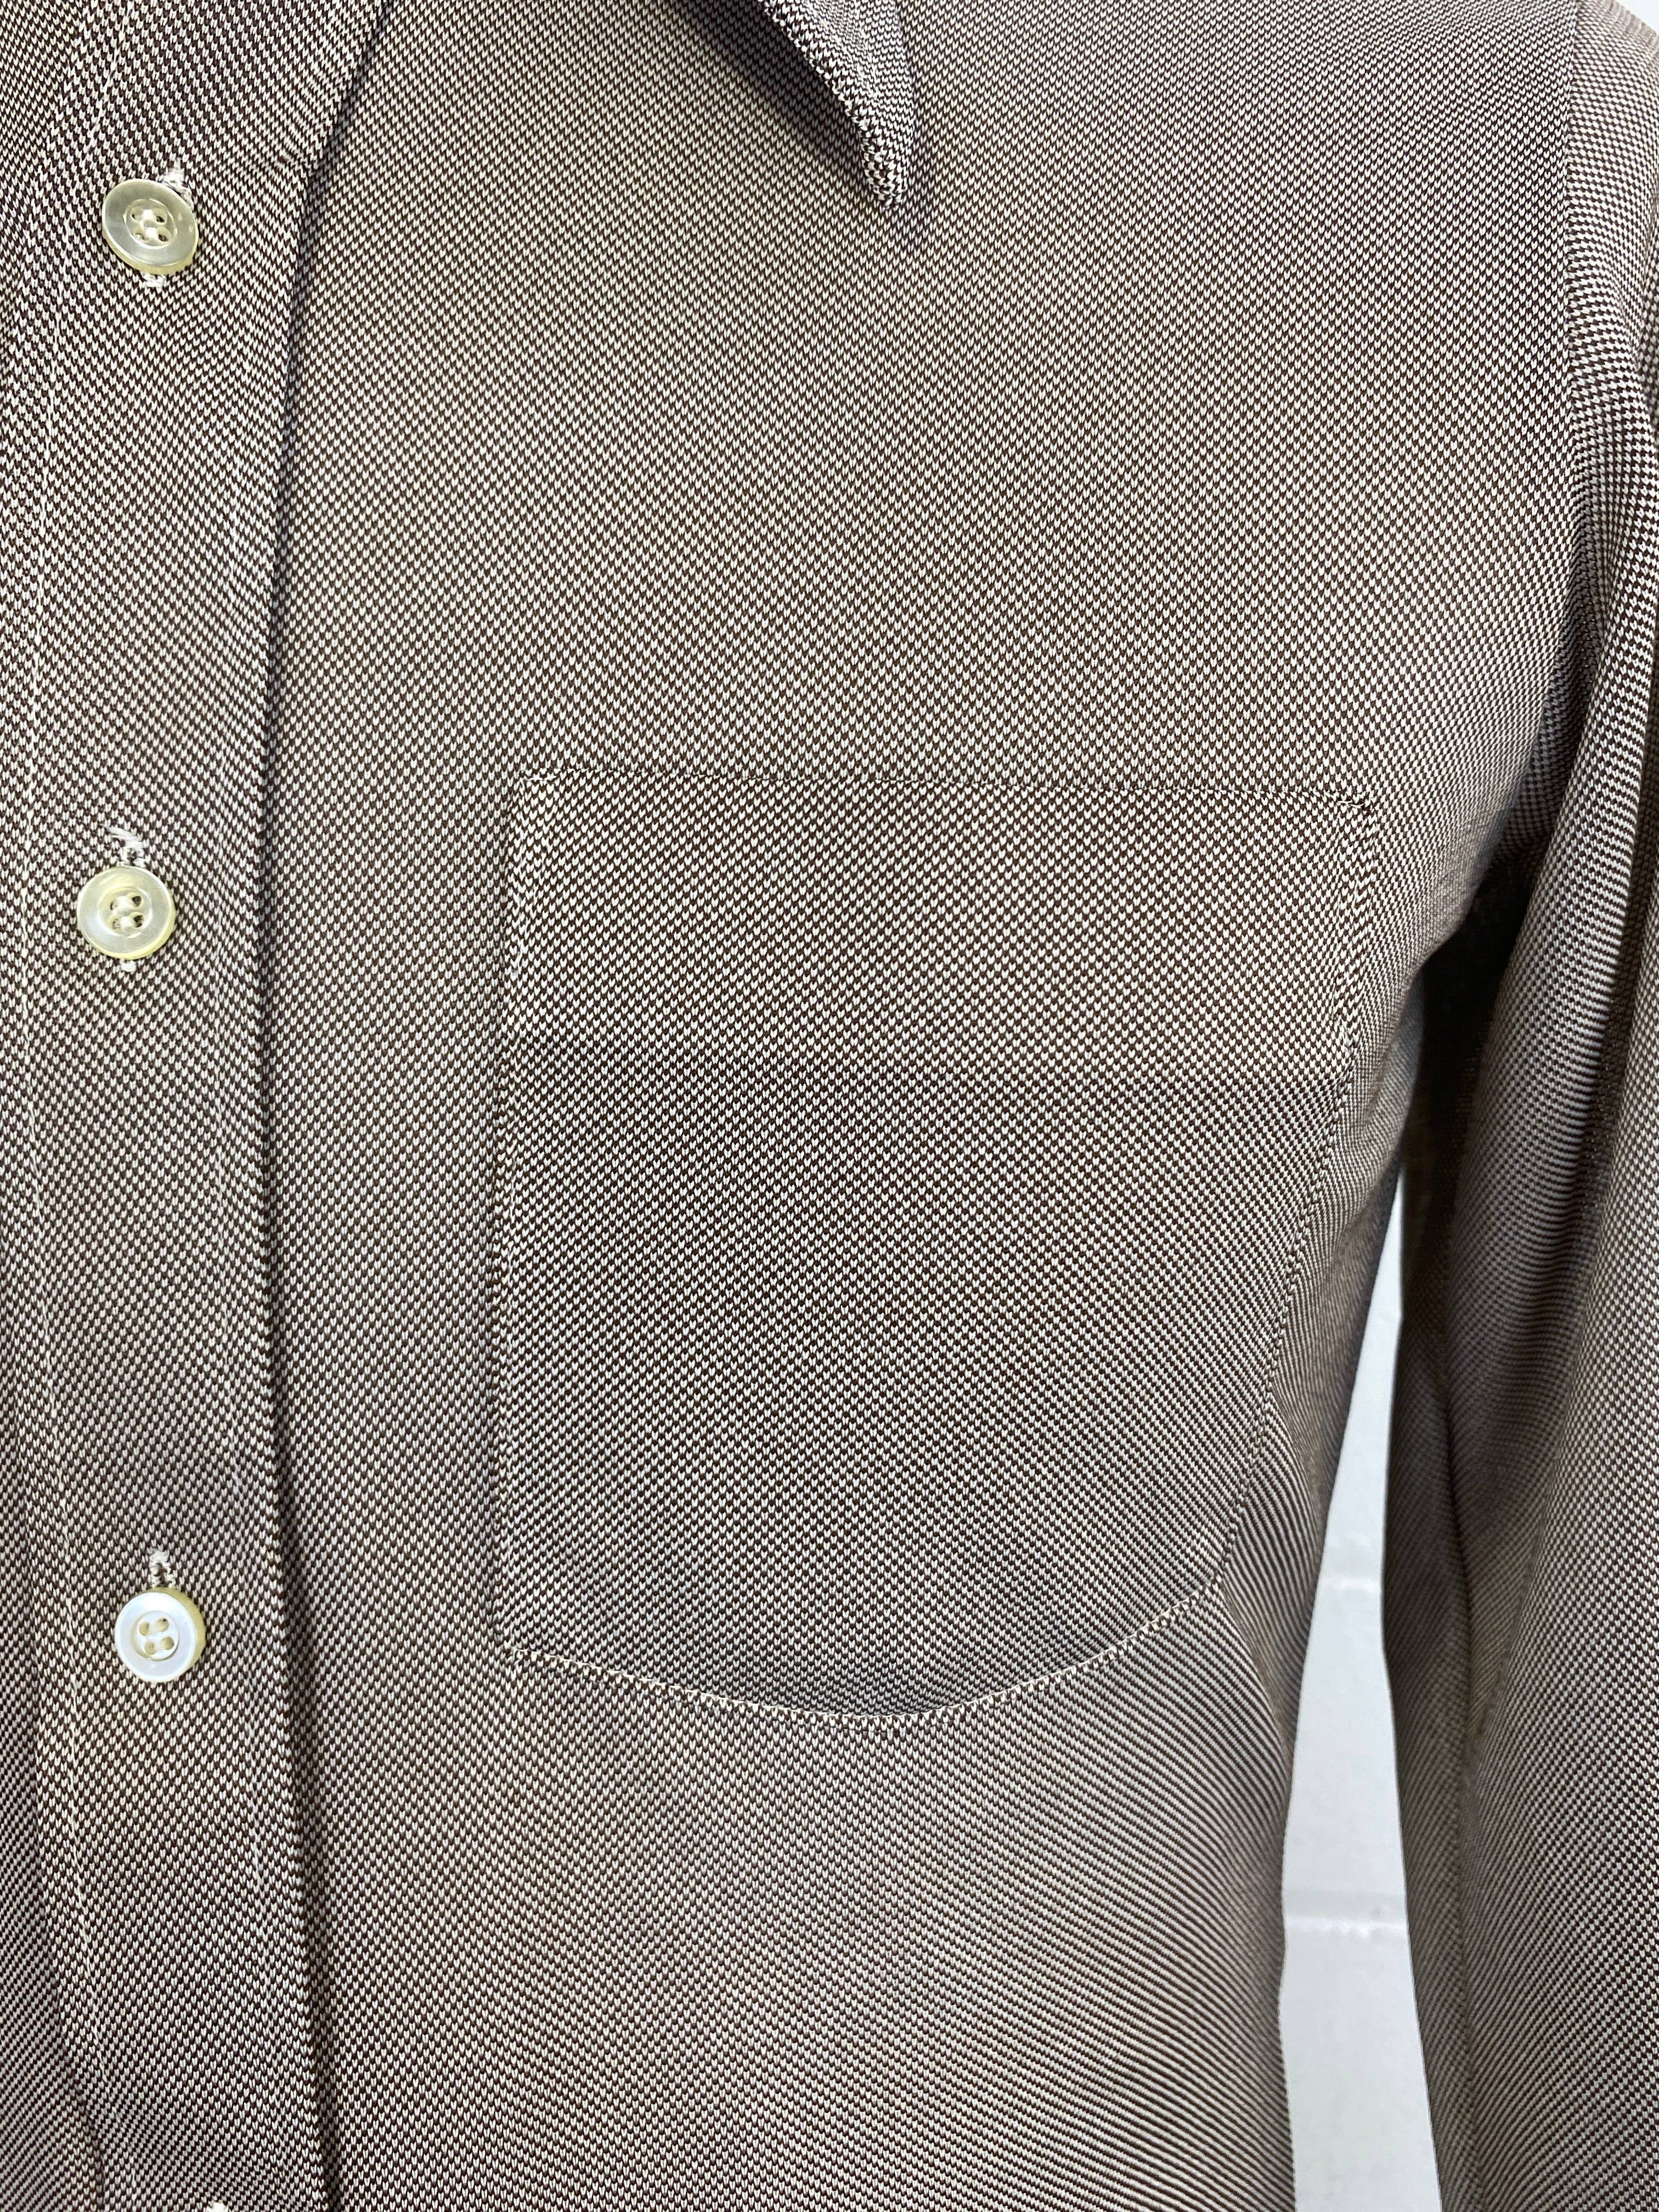 Vintage 70s Men's Brown Poly-Knit Button-Up Shirt, Doubles – Ian